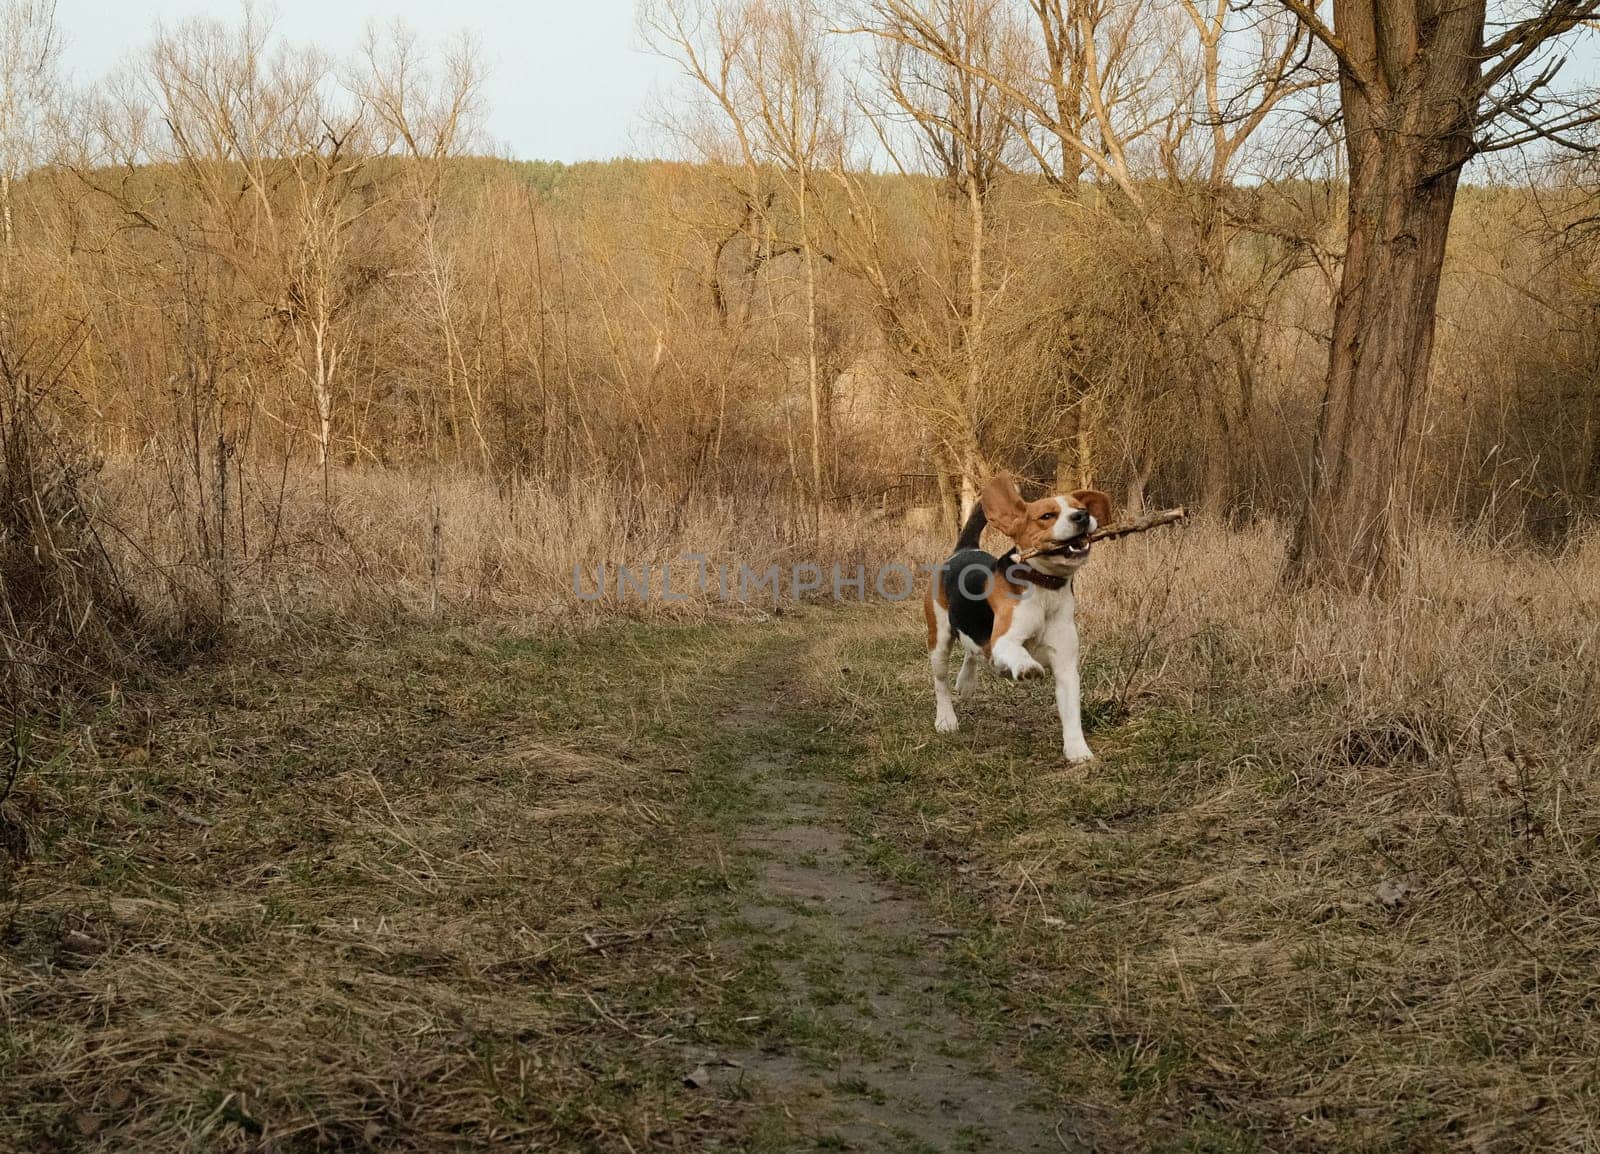 Playing little puppy beagle with stick on yellow lawn, countryside nature. by kristina_kokhanova